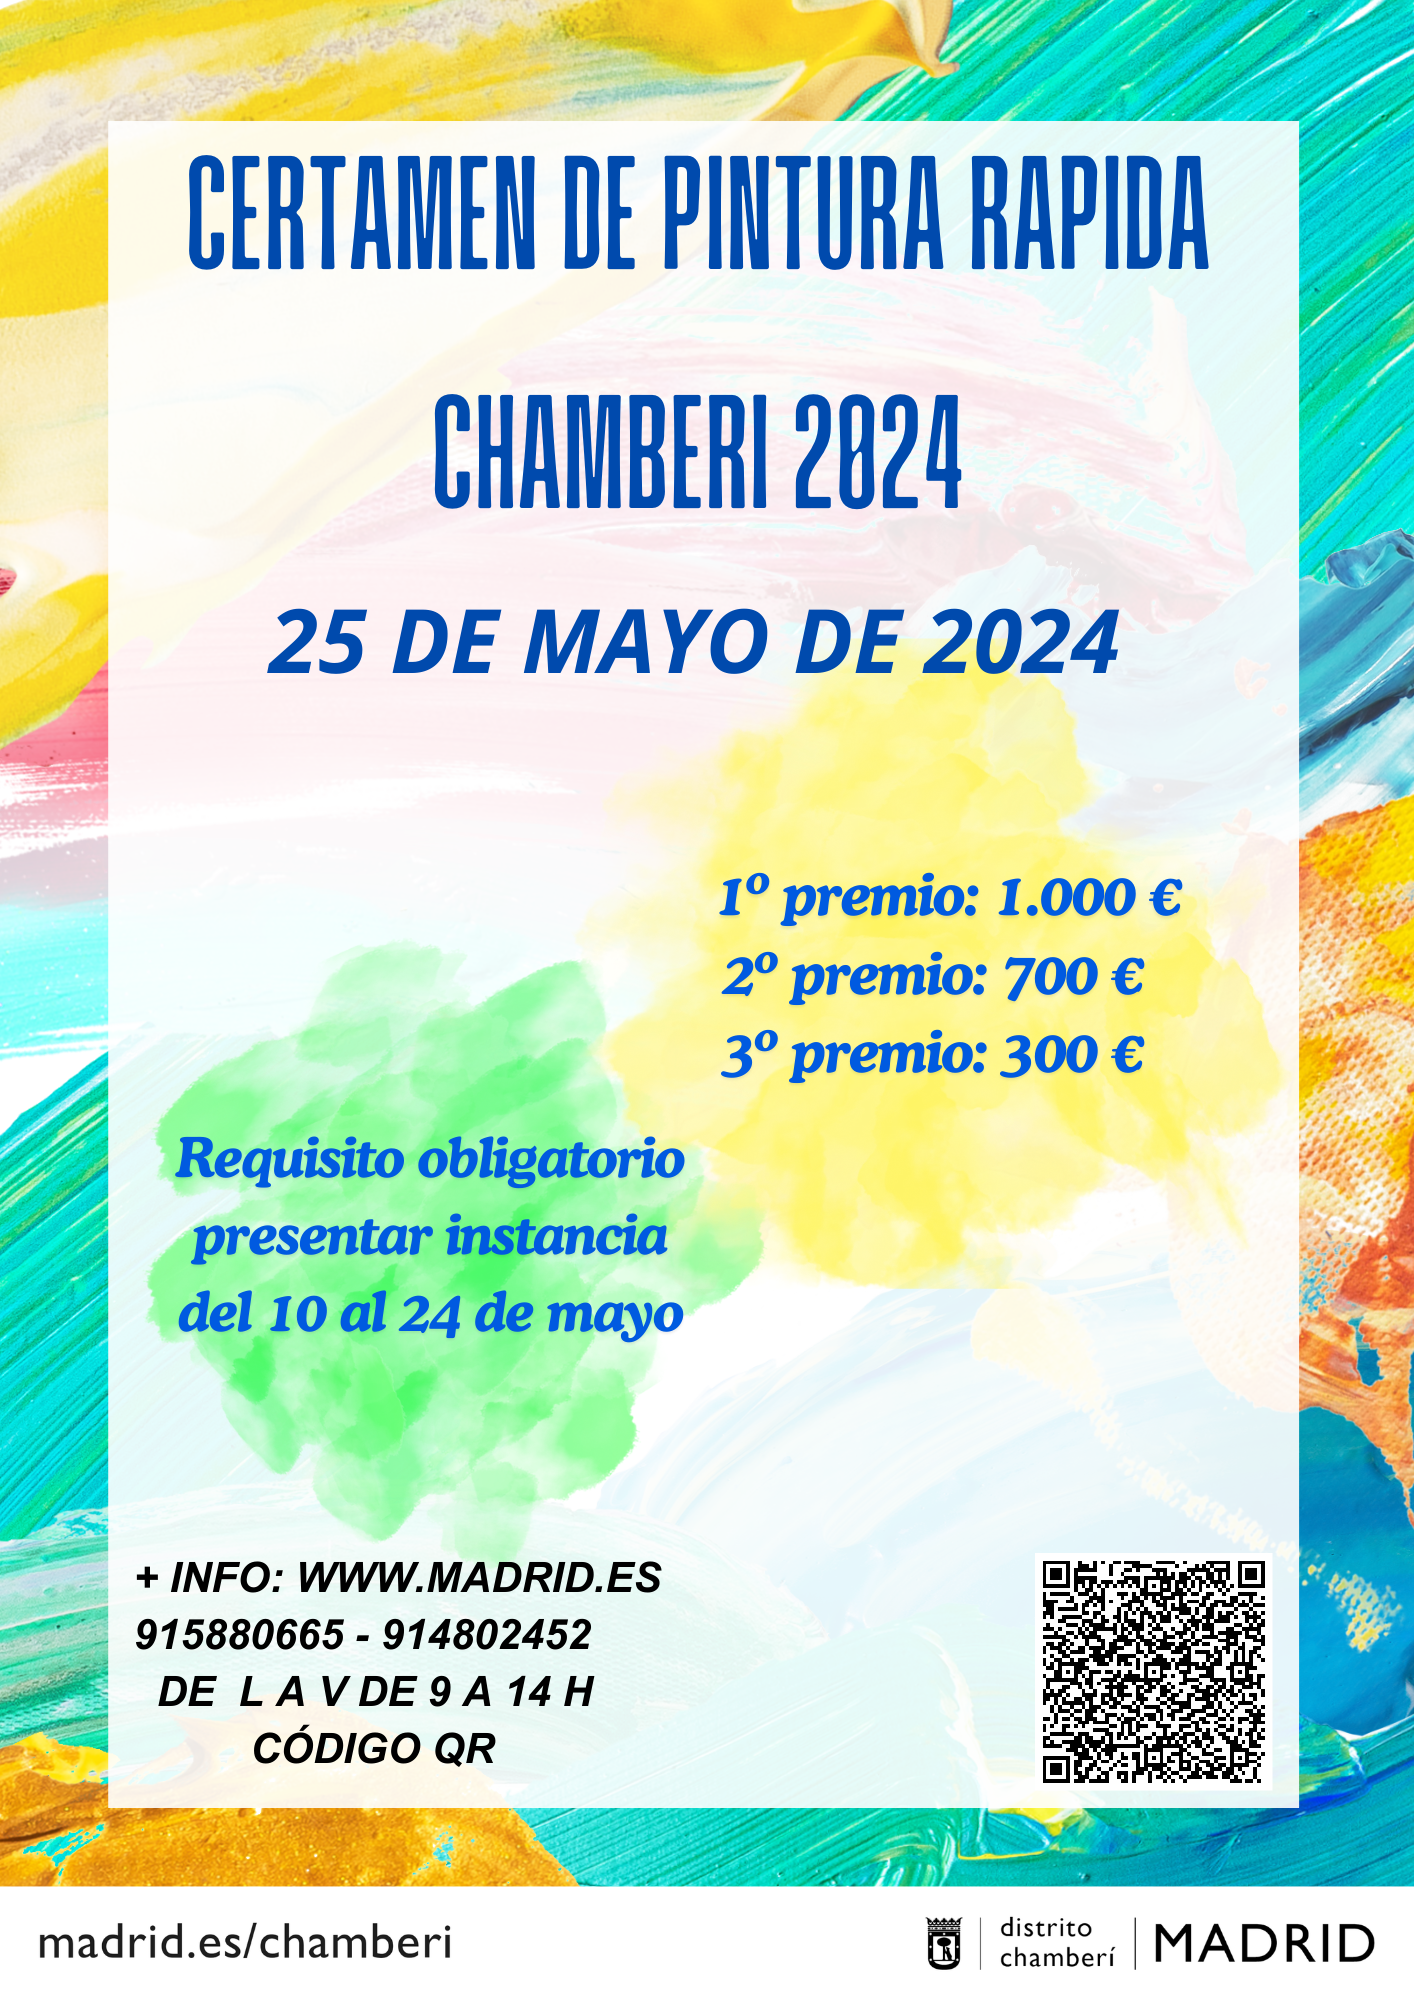 Imagen del cartel de convocatoria del certamen de pintura rápida en Chamberi año 2024